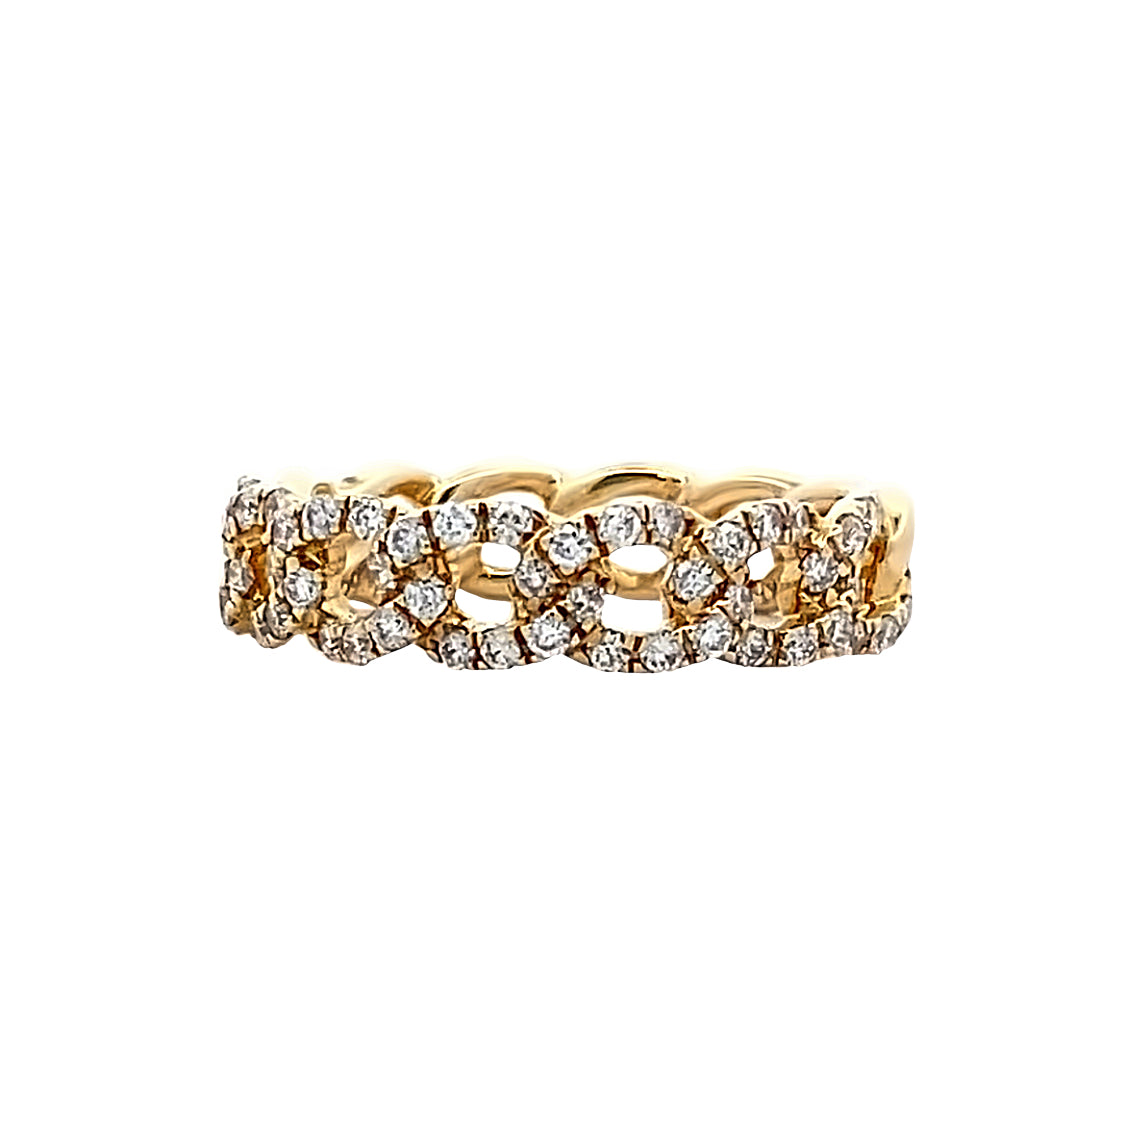 14 Karat Contemporary Style Diamond Fashion Ladies Ring   RG11801-4YC